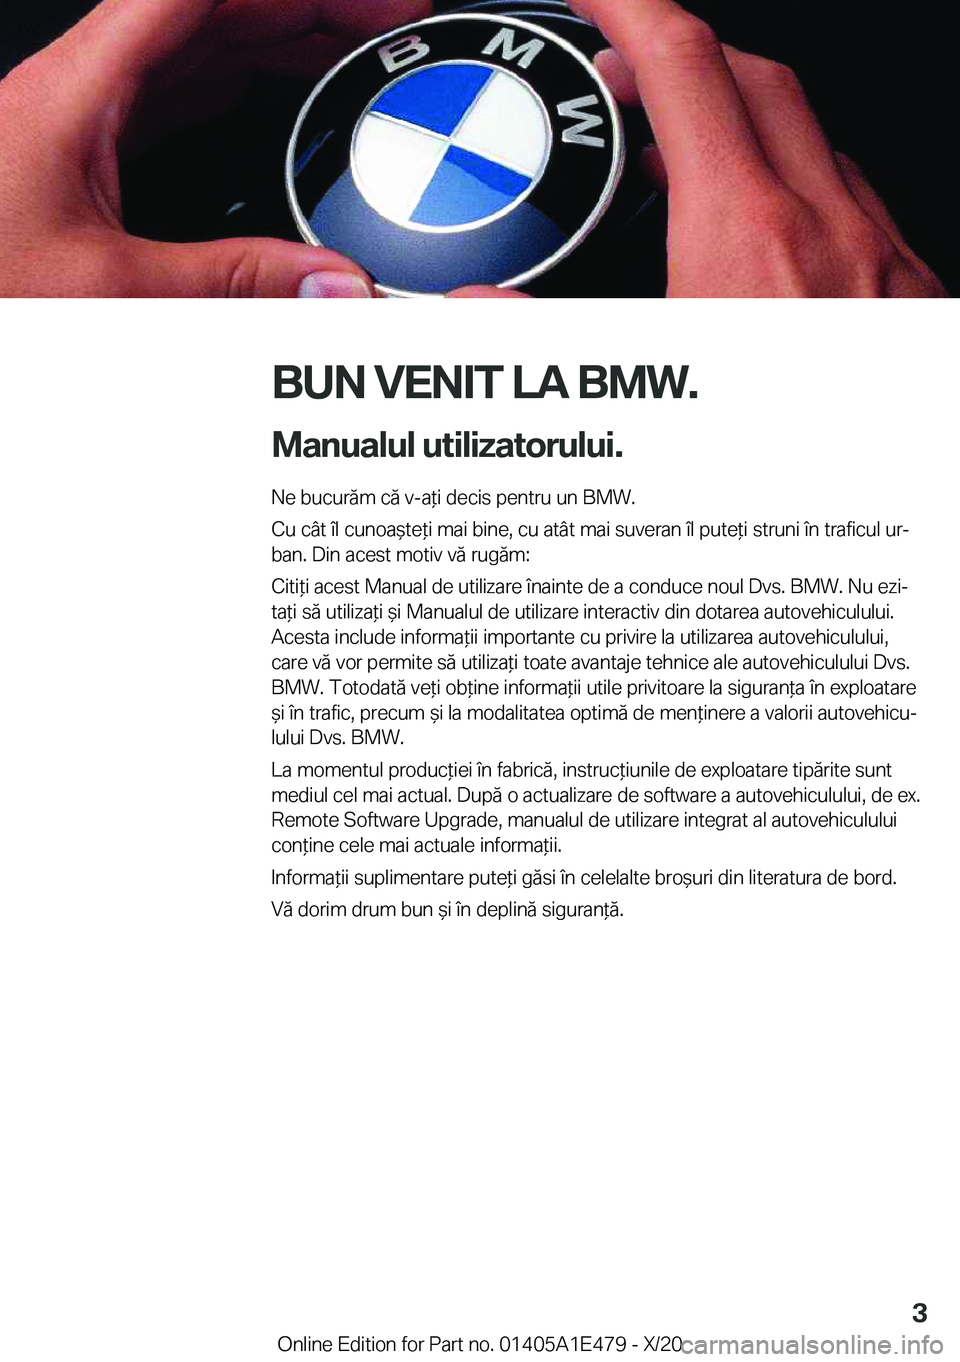 BMW M3 2021  Ghiduri De Utilizare (in Romanian) �B�U�N��V�E�N�I�T��L�A��B�M�W�.�M�a�n�u�a�l�u�l��u�t�i�l�i�z�a�t�o�r�u�l�u�i�.
�N�e��b�u�c�u�r�ă�m��c�ă��v�-�a*�i��d�e�c�i�s��p�e�n�t�r�u��u�n��B�M�W�.
�C�u��c�